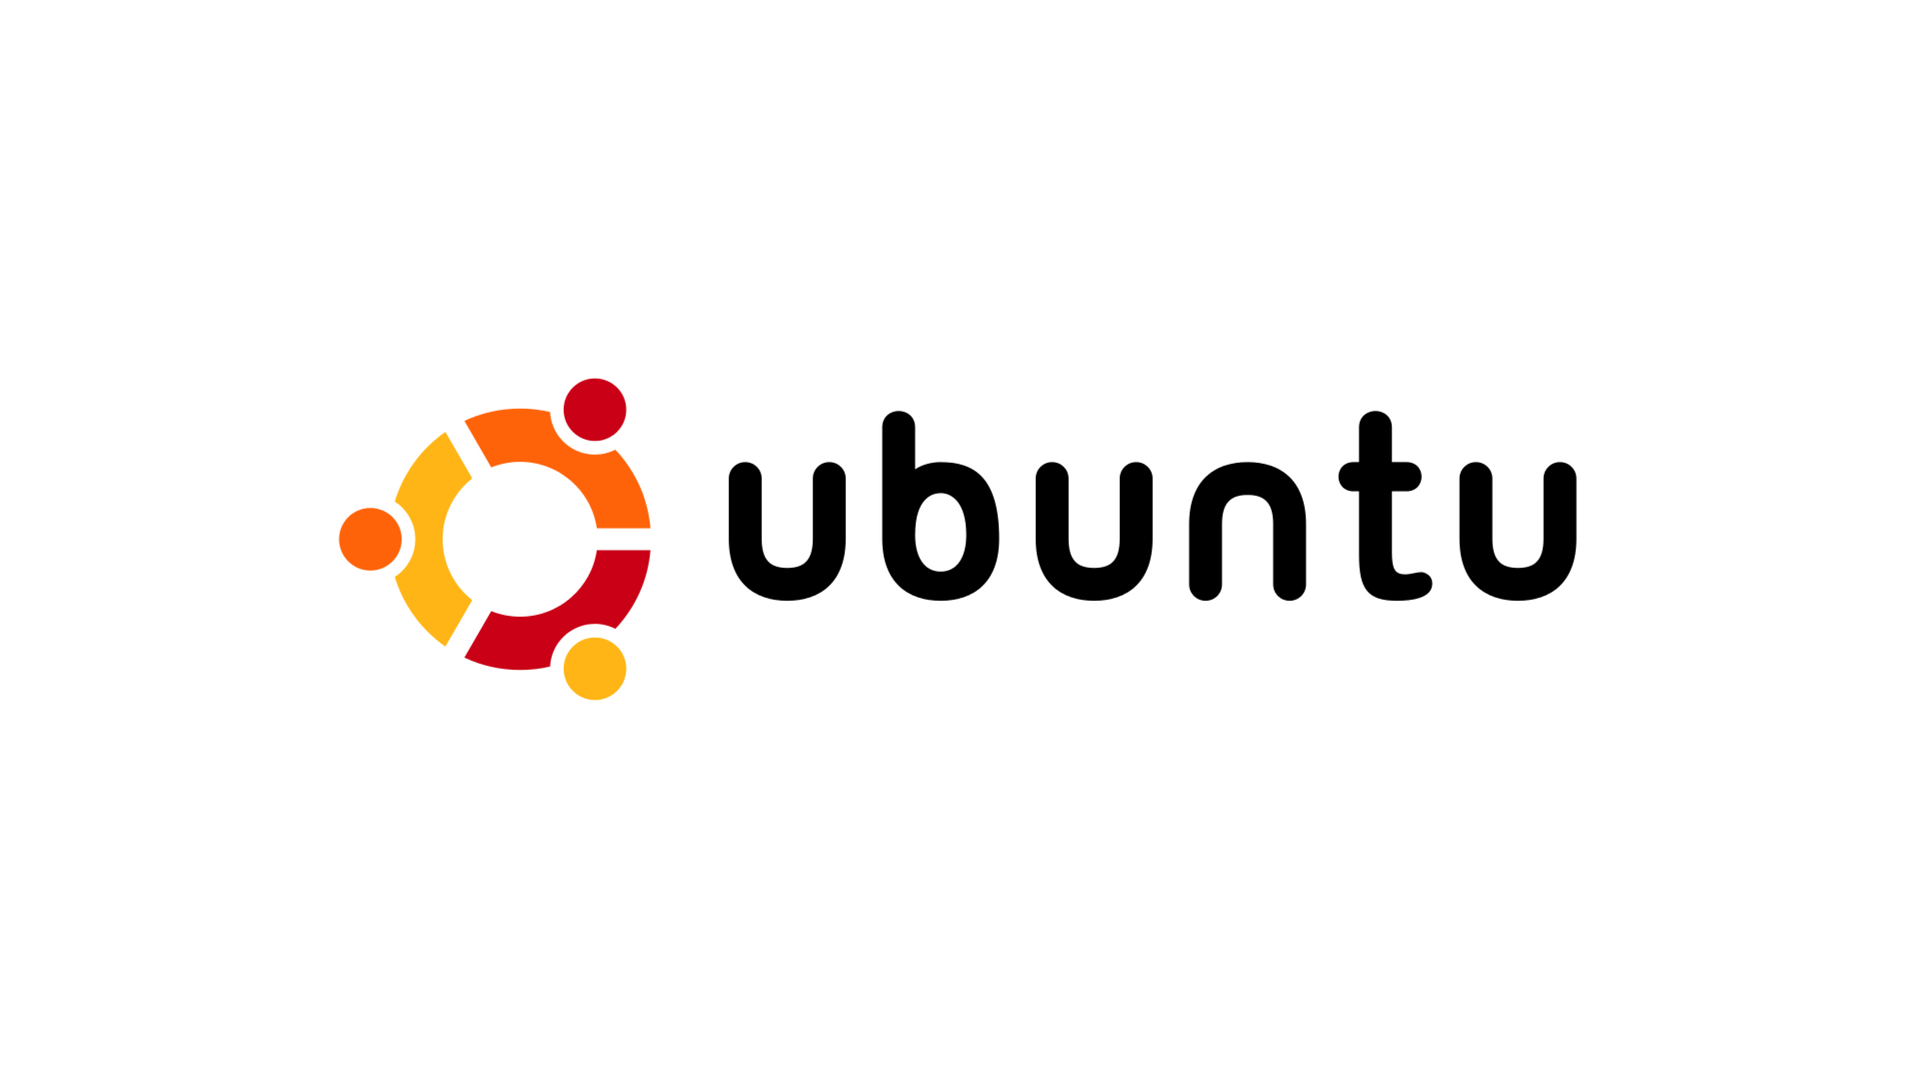 How To Install Ubuntu Operating System?